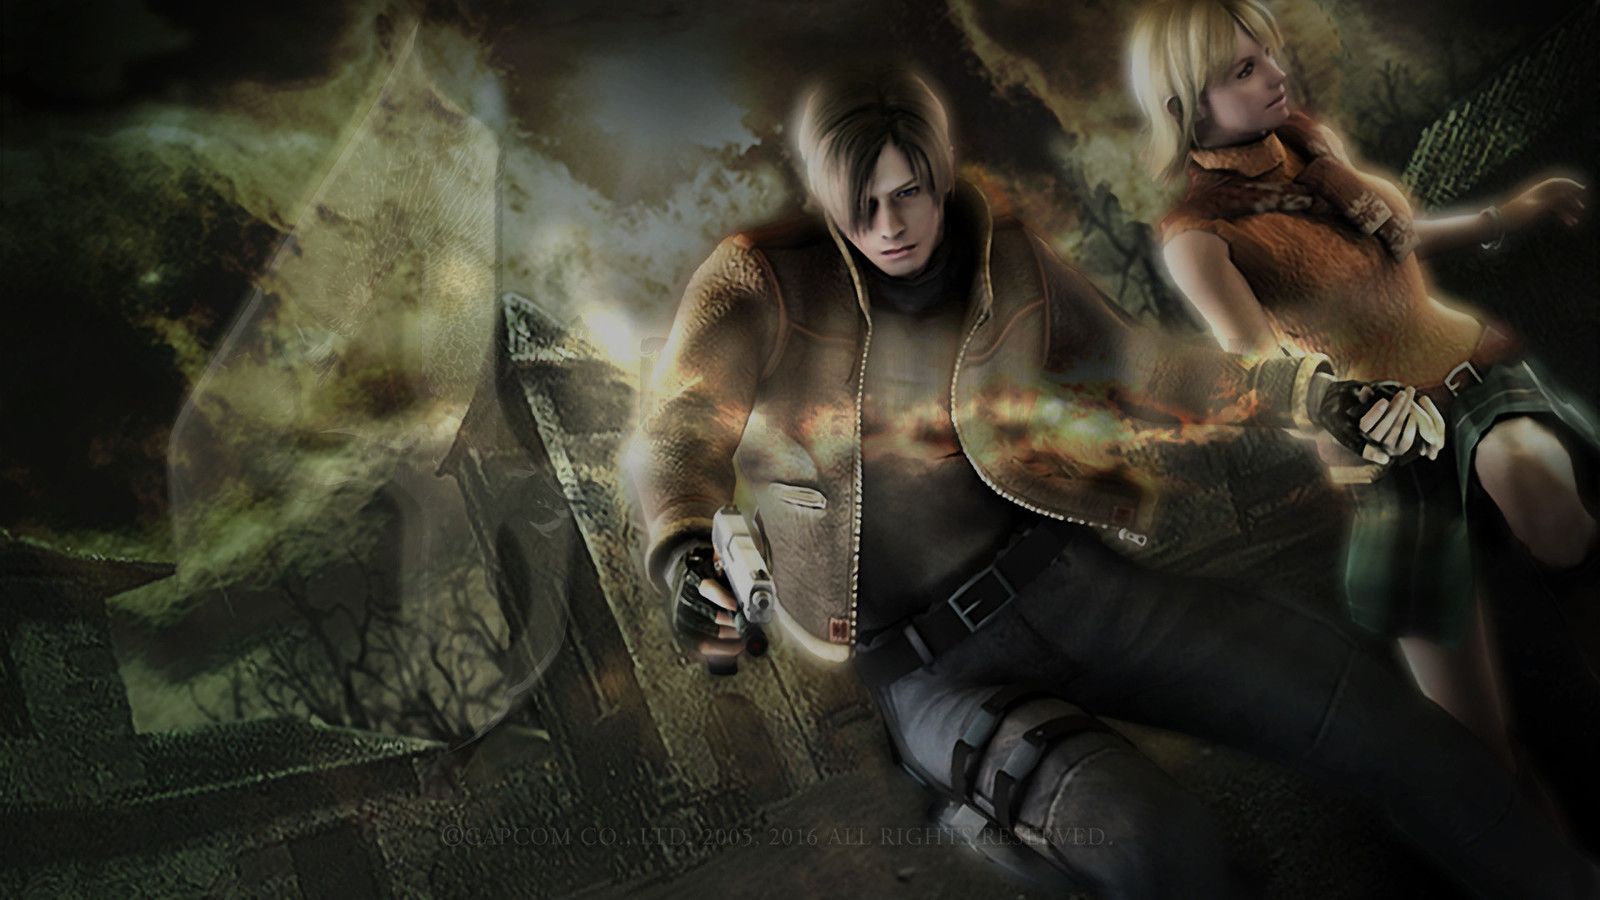 Resident Evil 4 4k Desktop Wallpapers Wallpaper Cave